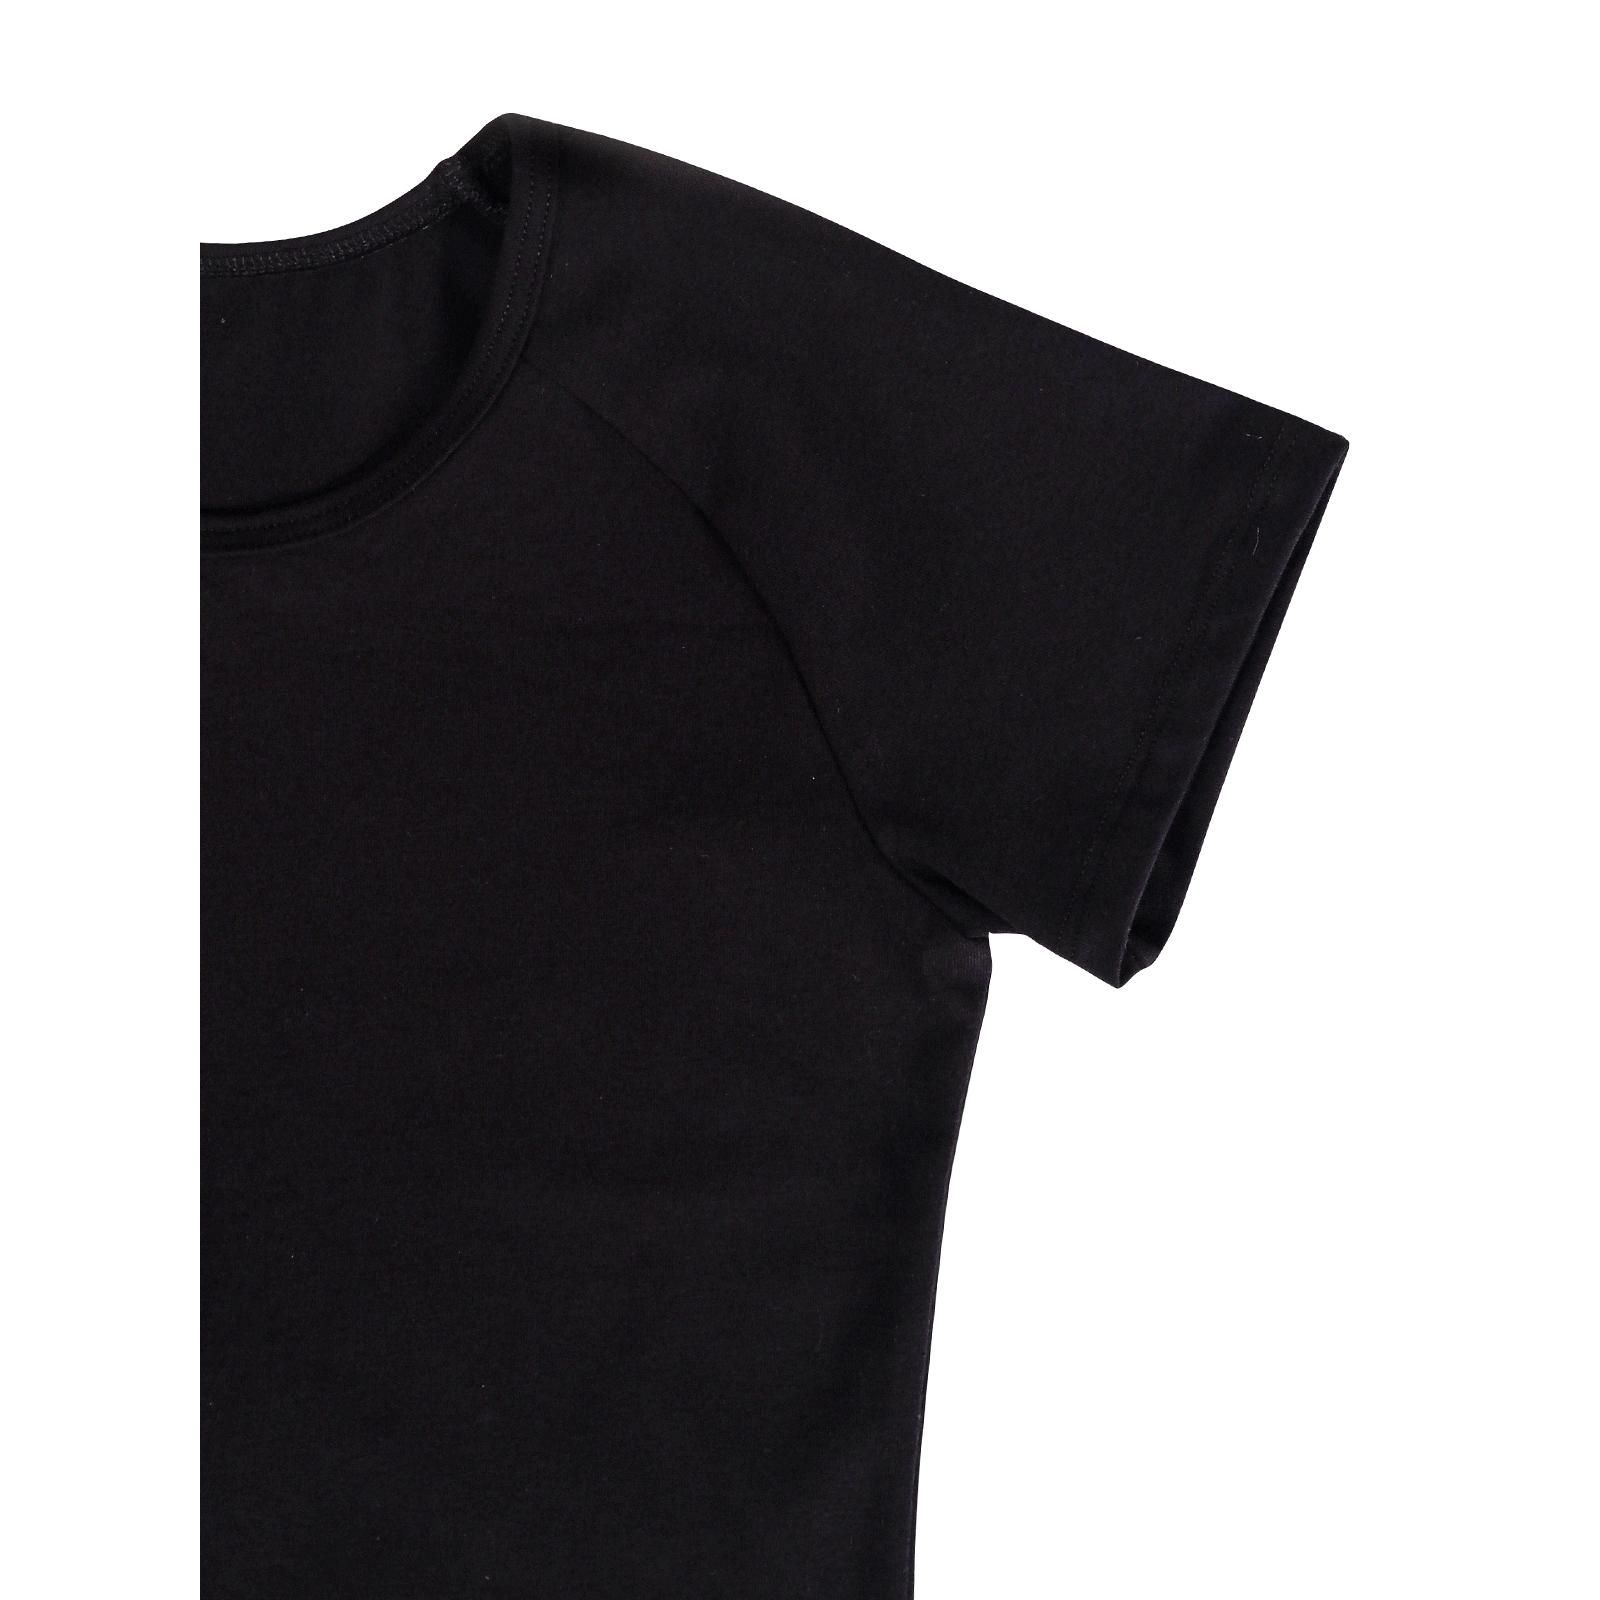 Camiseta Mangas Raglán de Algodón SOLO Negro Talla 28